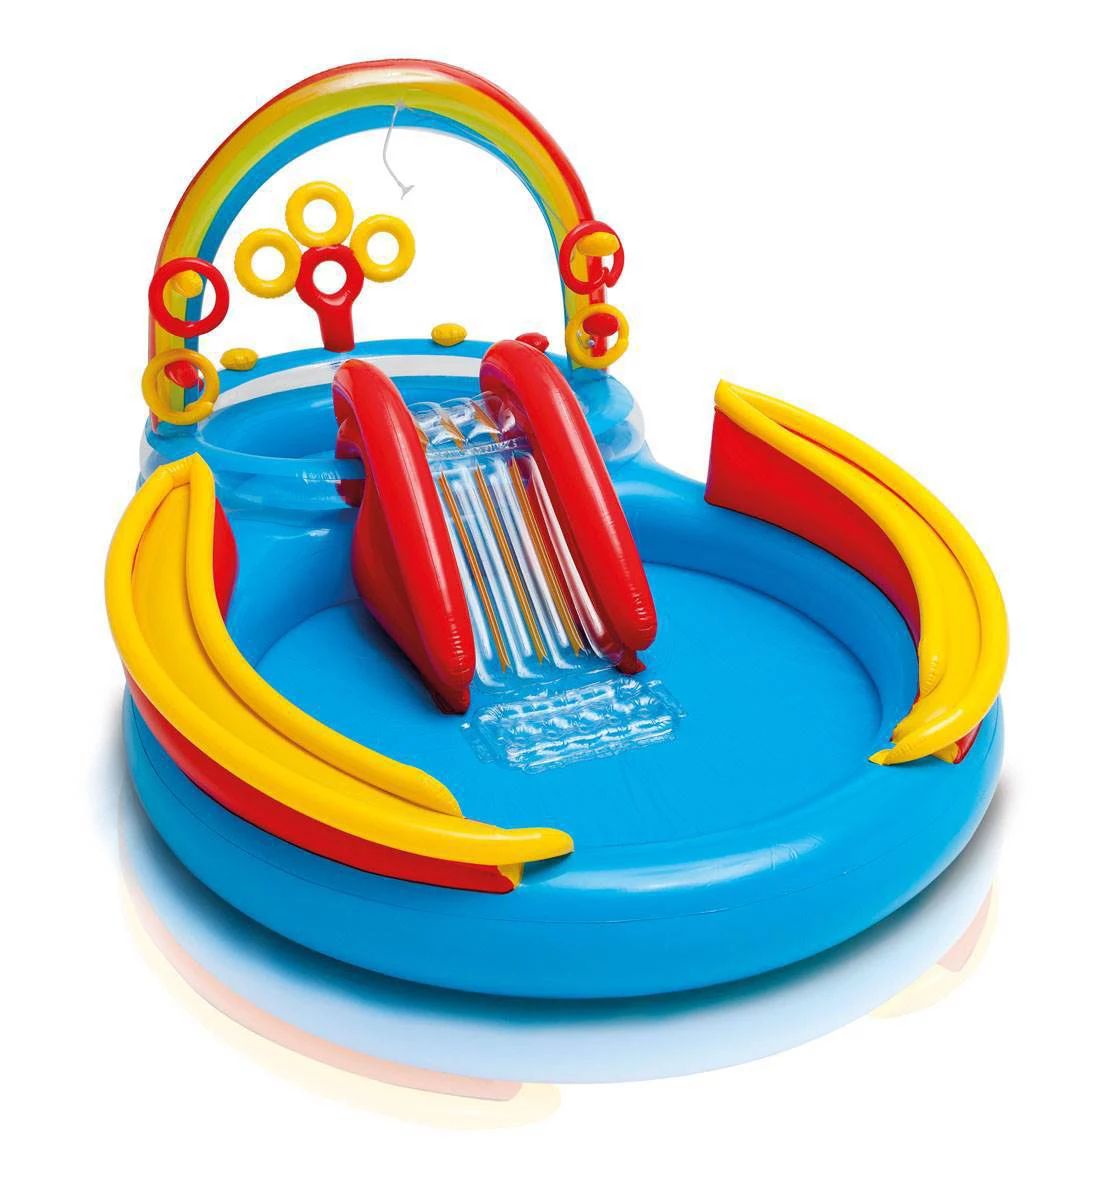 Intex 9,75 x 6,3 x 53 дюйма Rainbow Slide Kids Play Надувной бассейн с кольцом в центре Intex